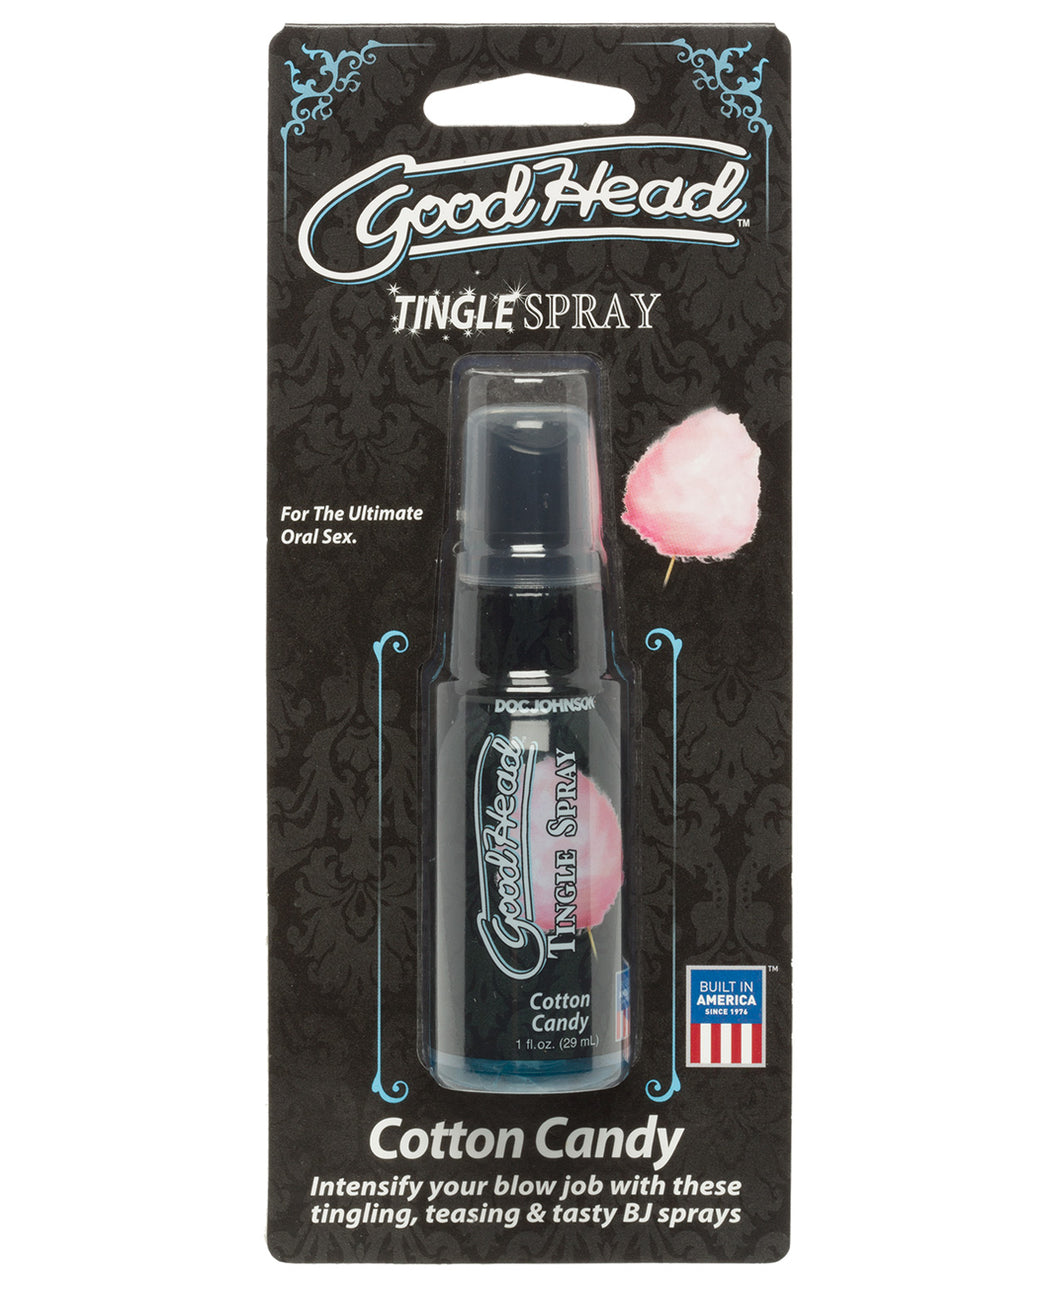 Good Head Tingle Spray - Cotton Candy